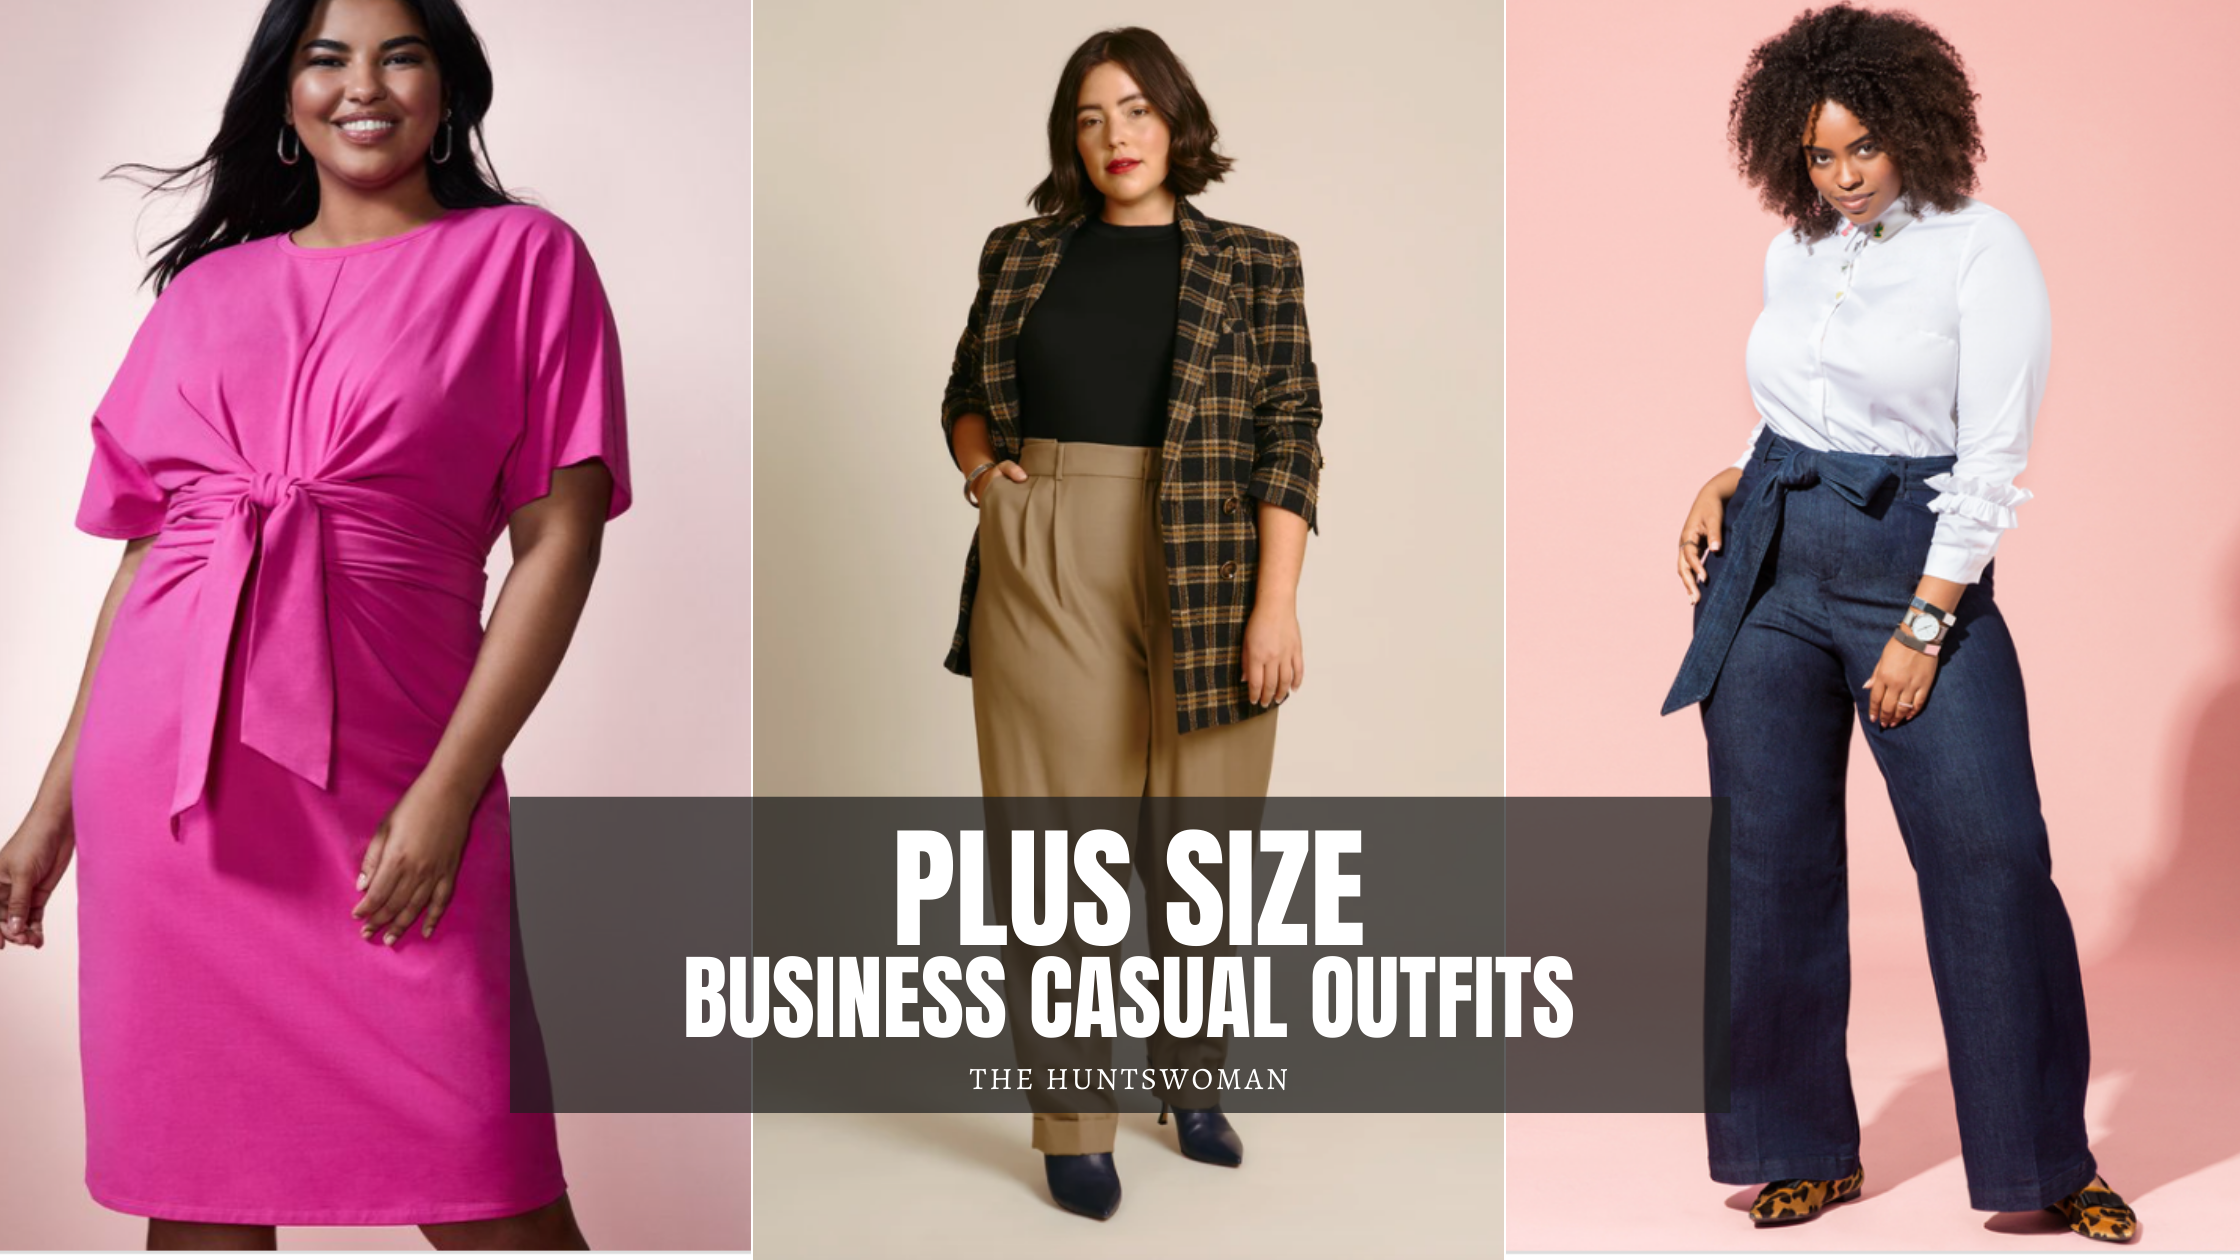 9+ Plus Size Business Casual Outfits - Ideas \u0026 Inspiration - The Huntswoman